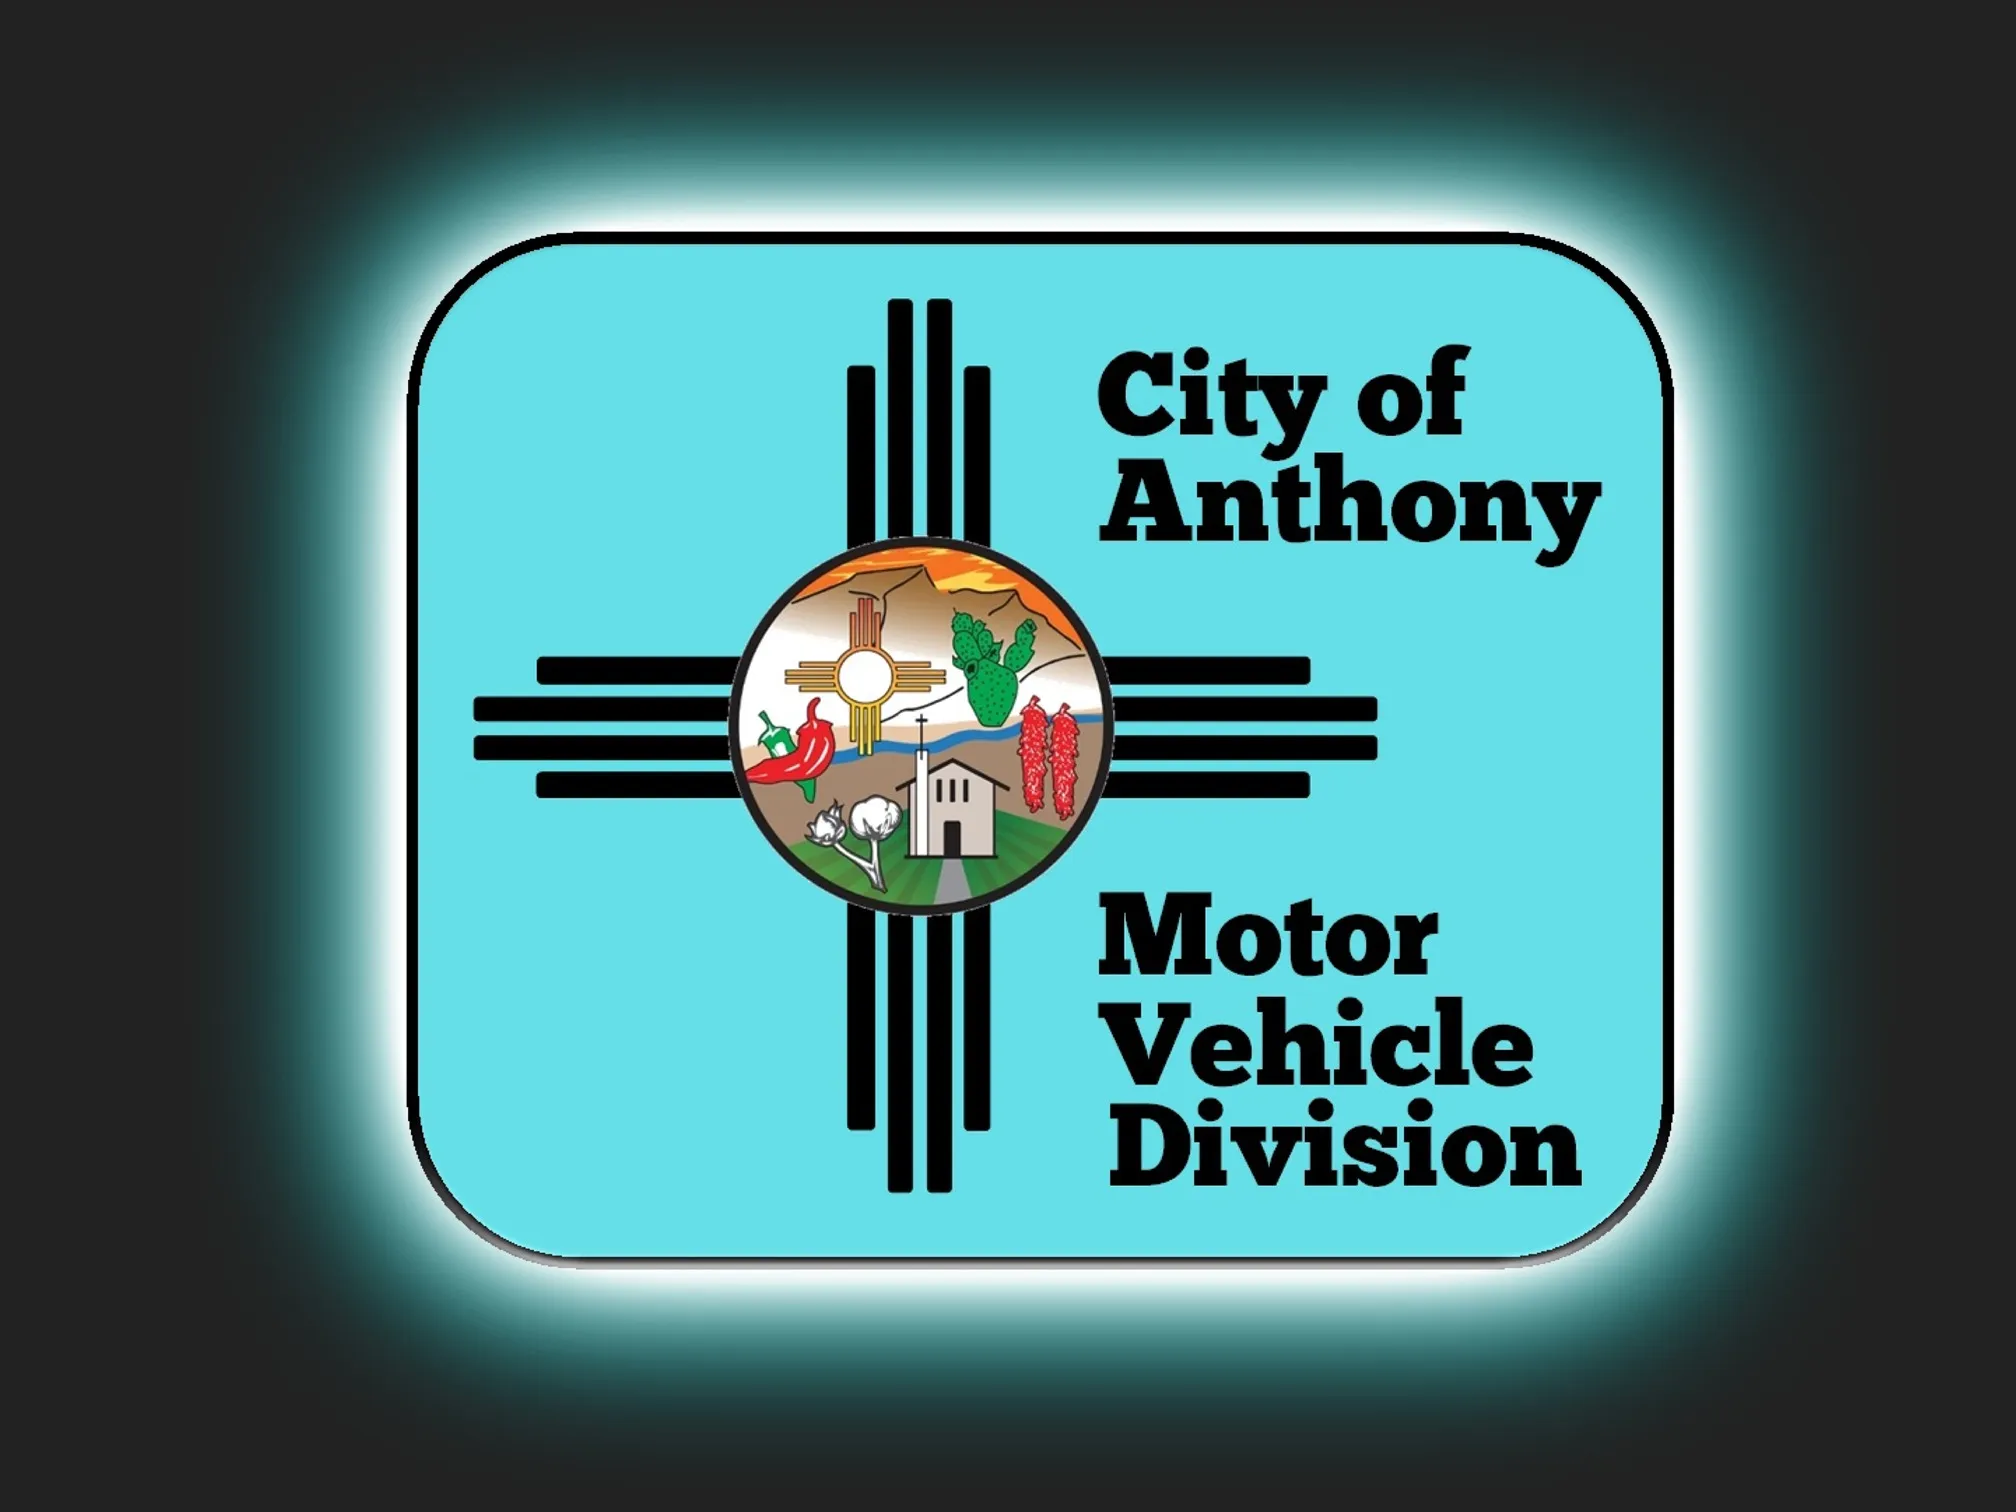 City of Anthony Motor Vehicle Division logo